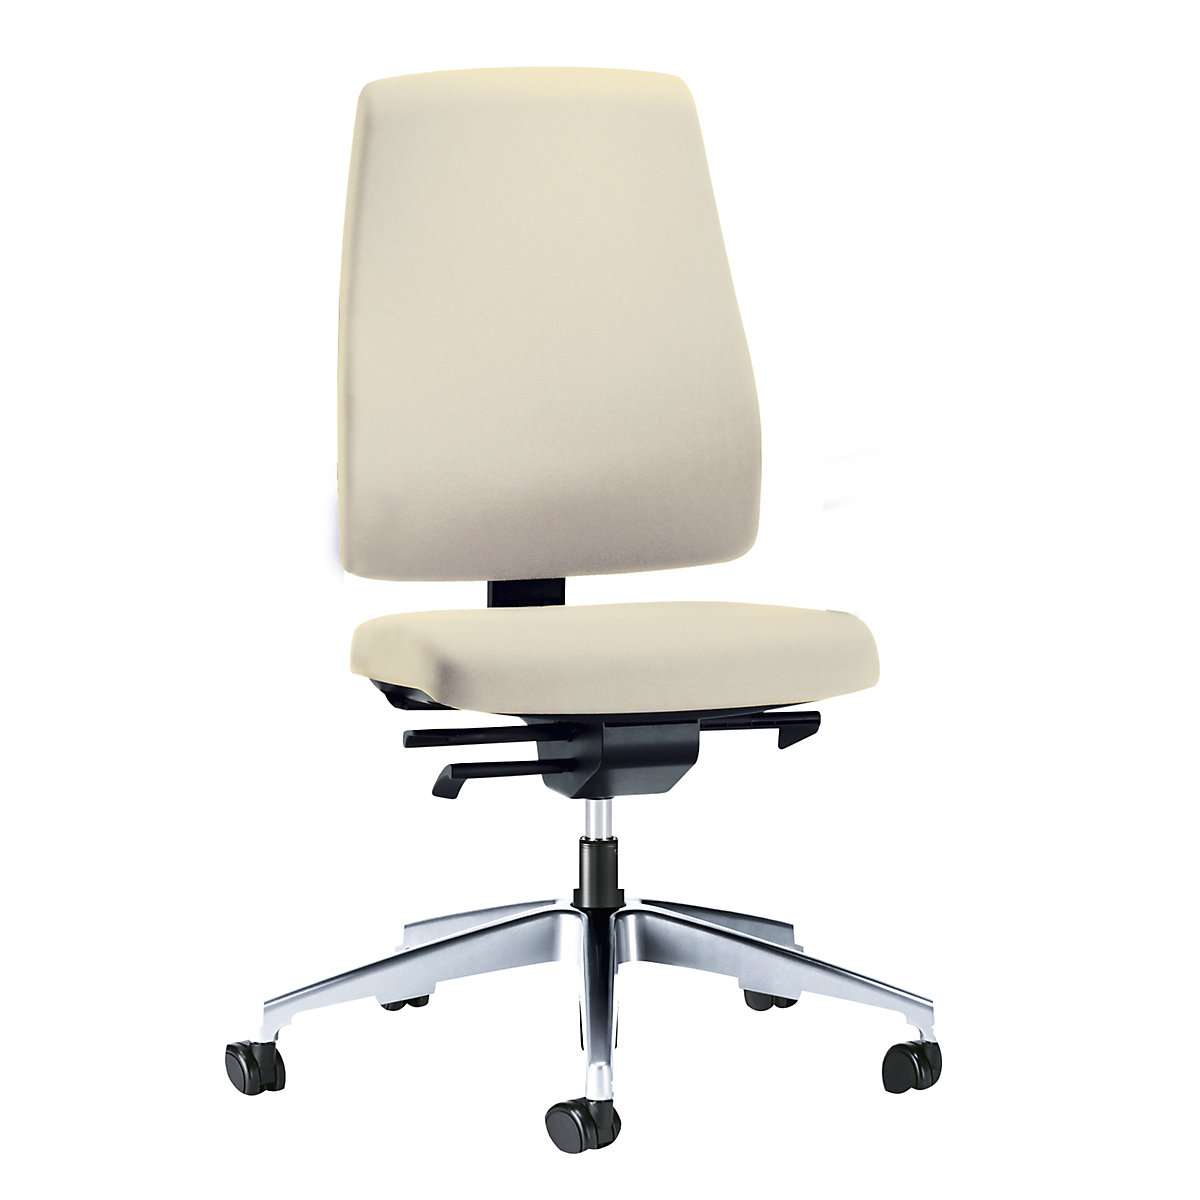 GOAL office swivel chair, back rest height 530 mm – interstuhl